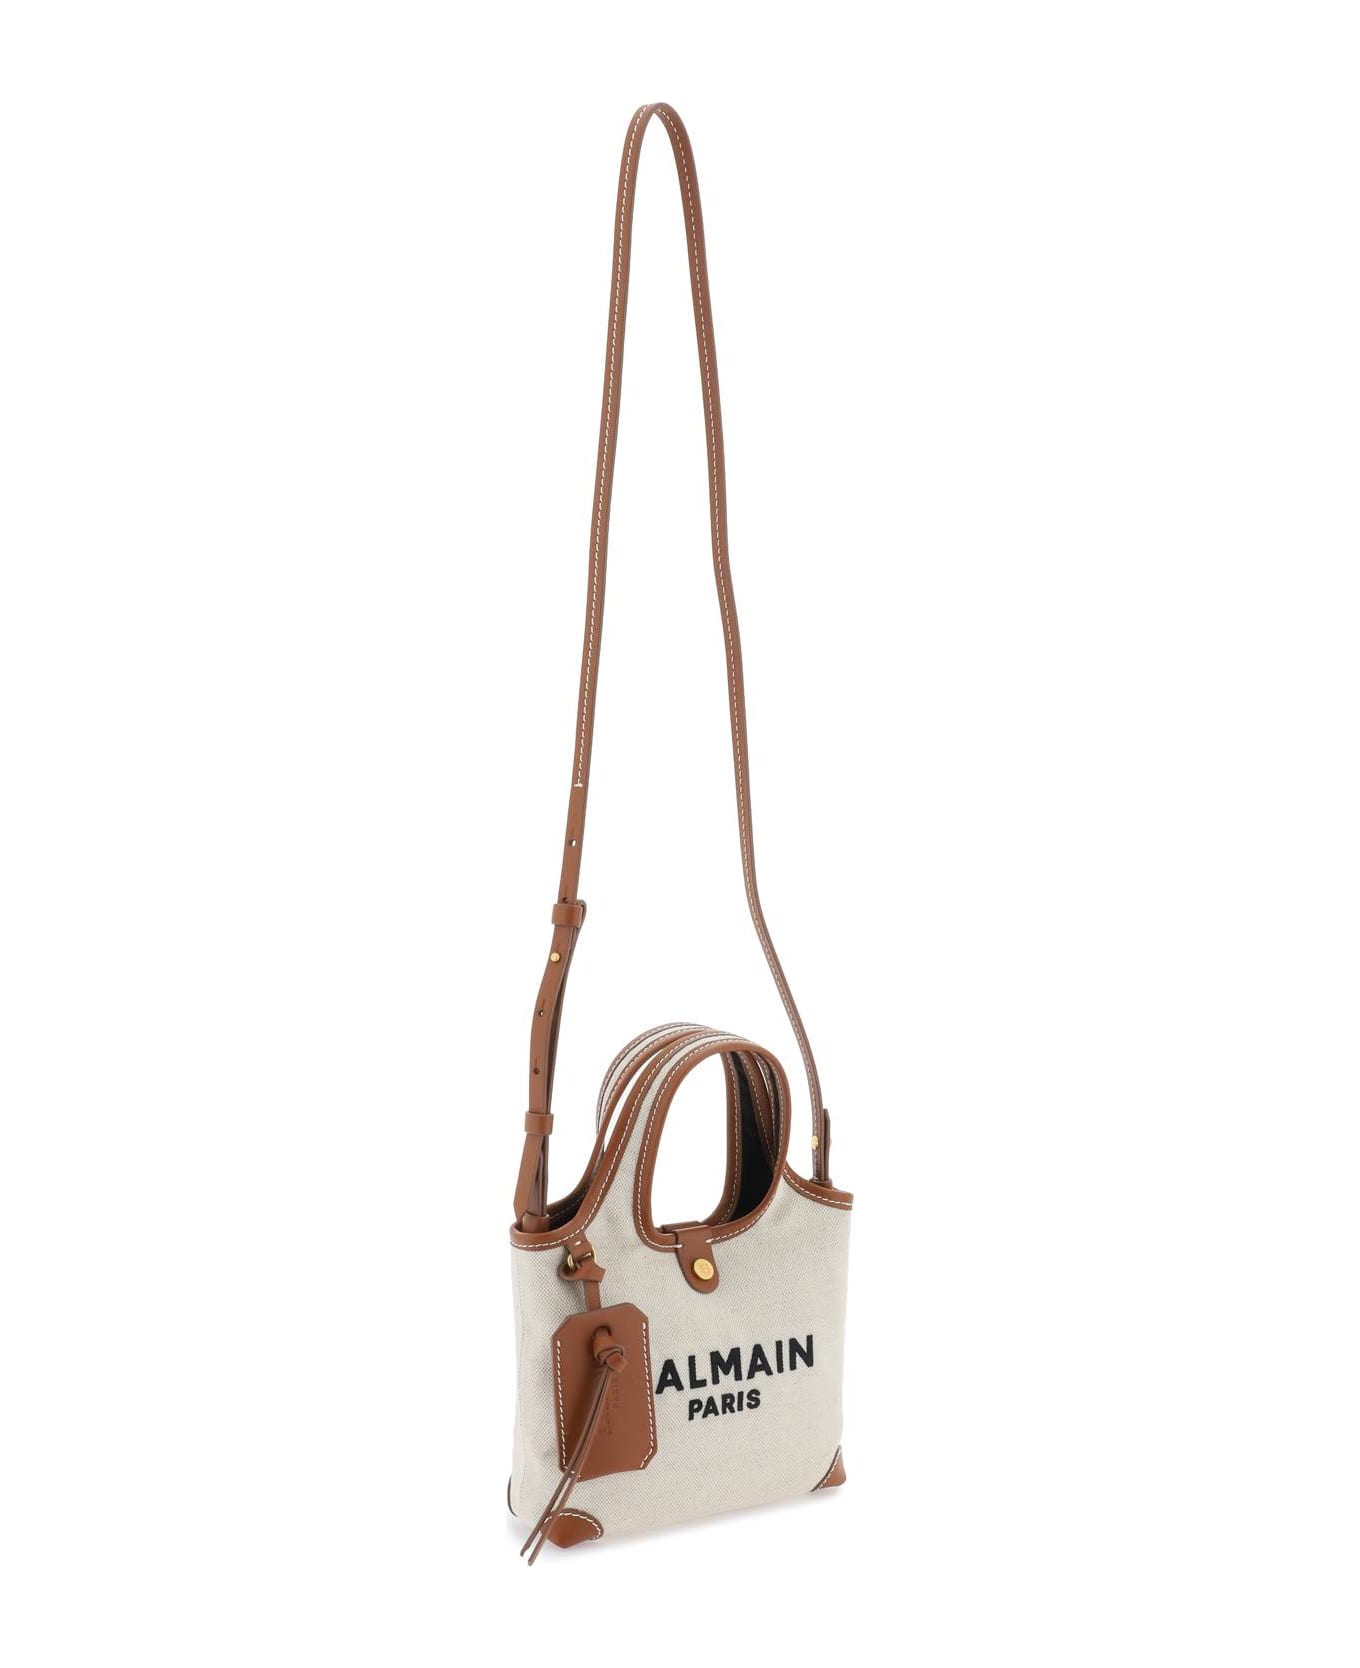 Balmain B-army Handbag - NATUREL MARRON (Brown) トートバッグ